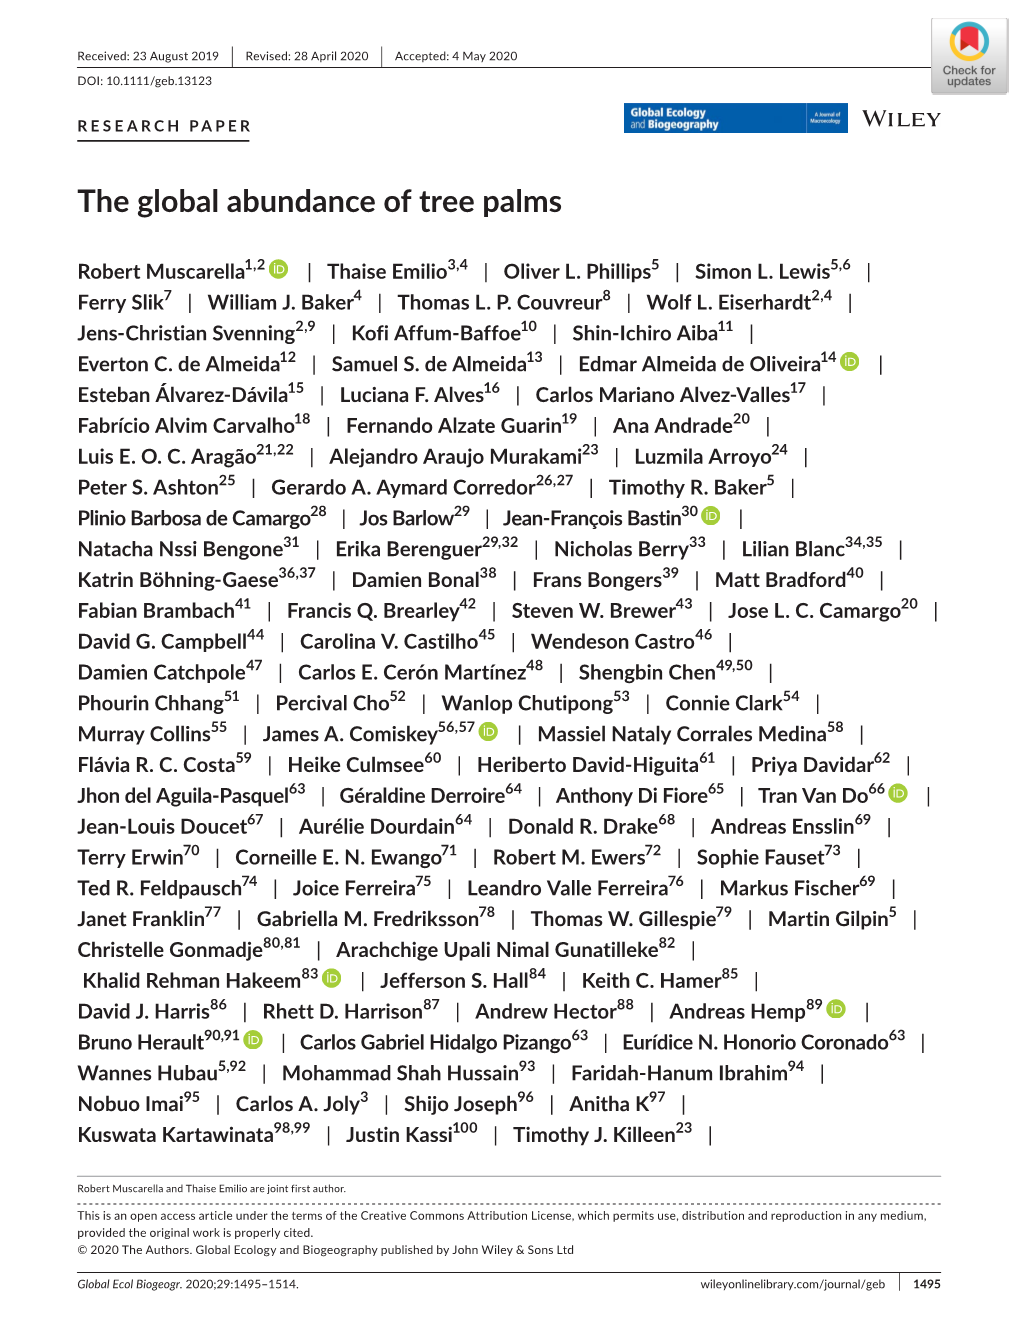 The Global Abundance of Tree Palms